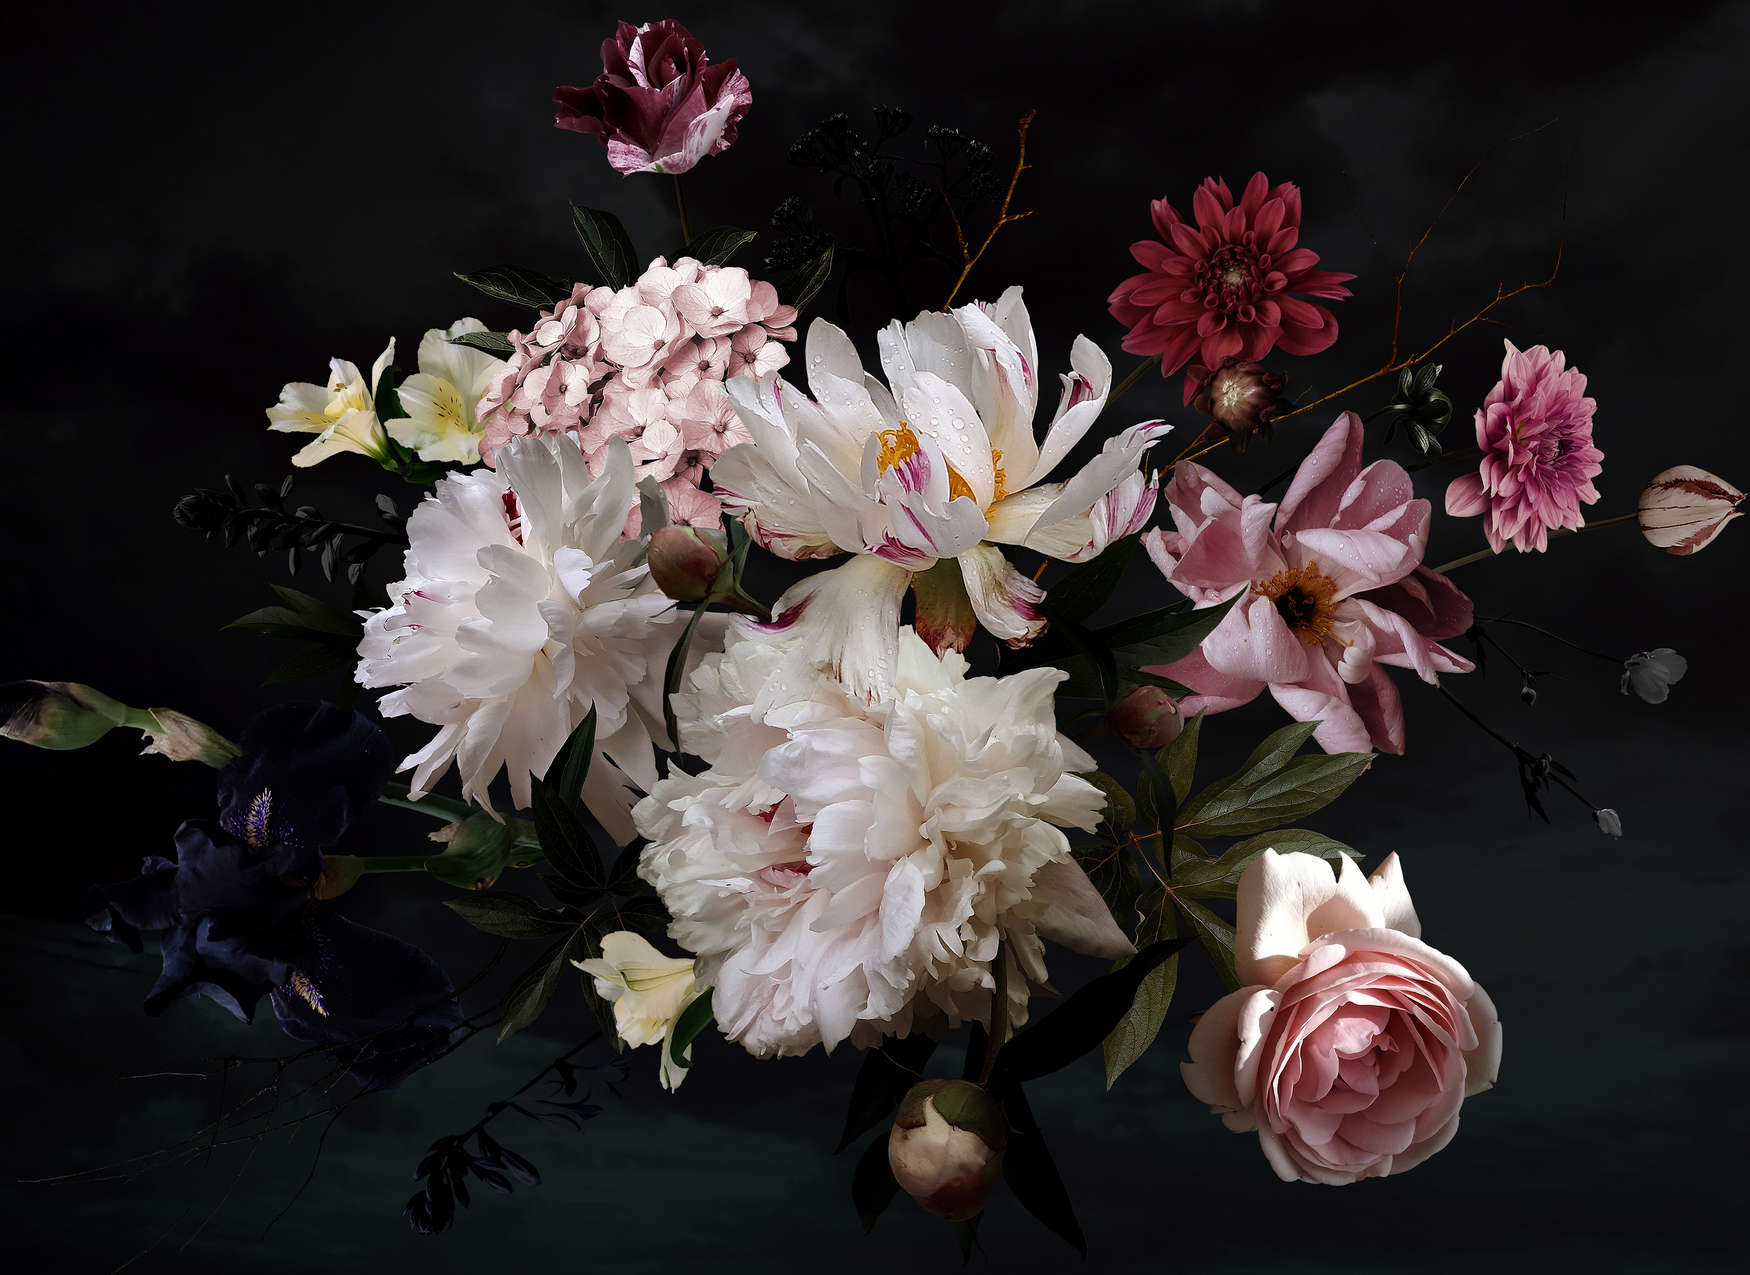             Fotomurali Bouquet - Bianco, rosa, nero
        